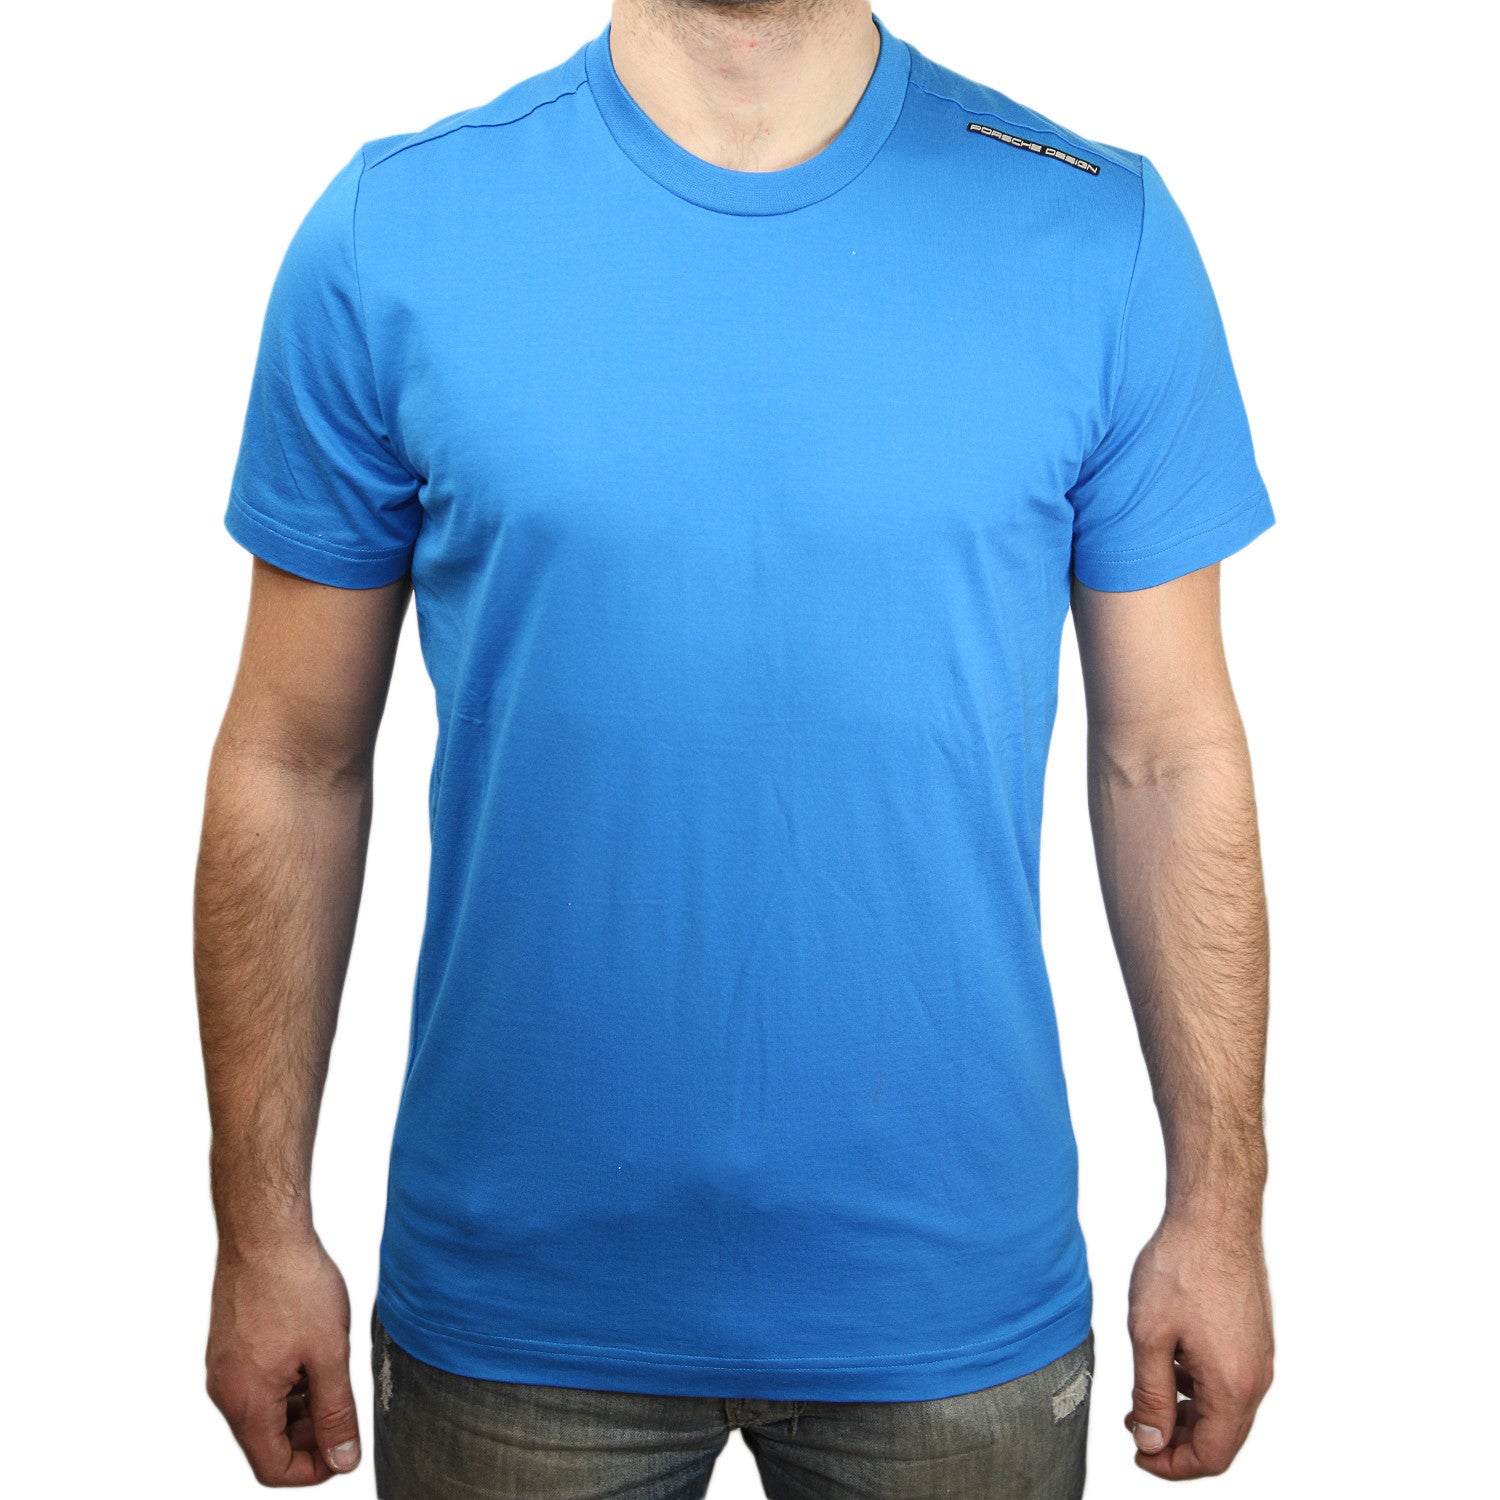 Adidas Men's T-Shirt - Blue - M